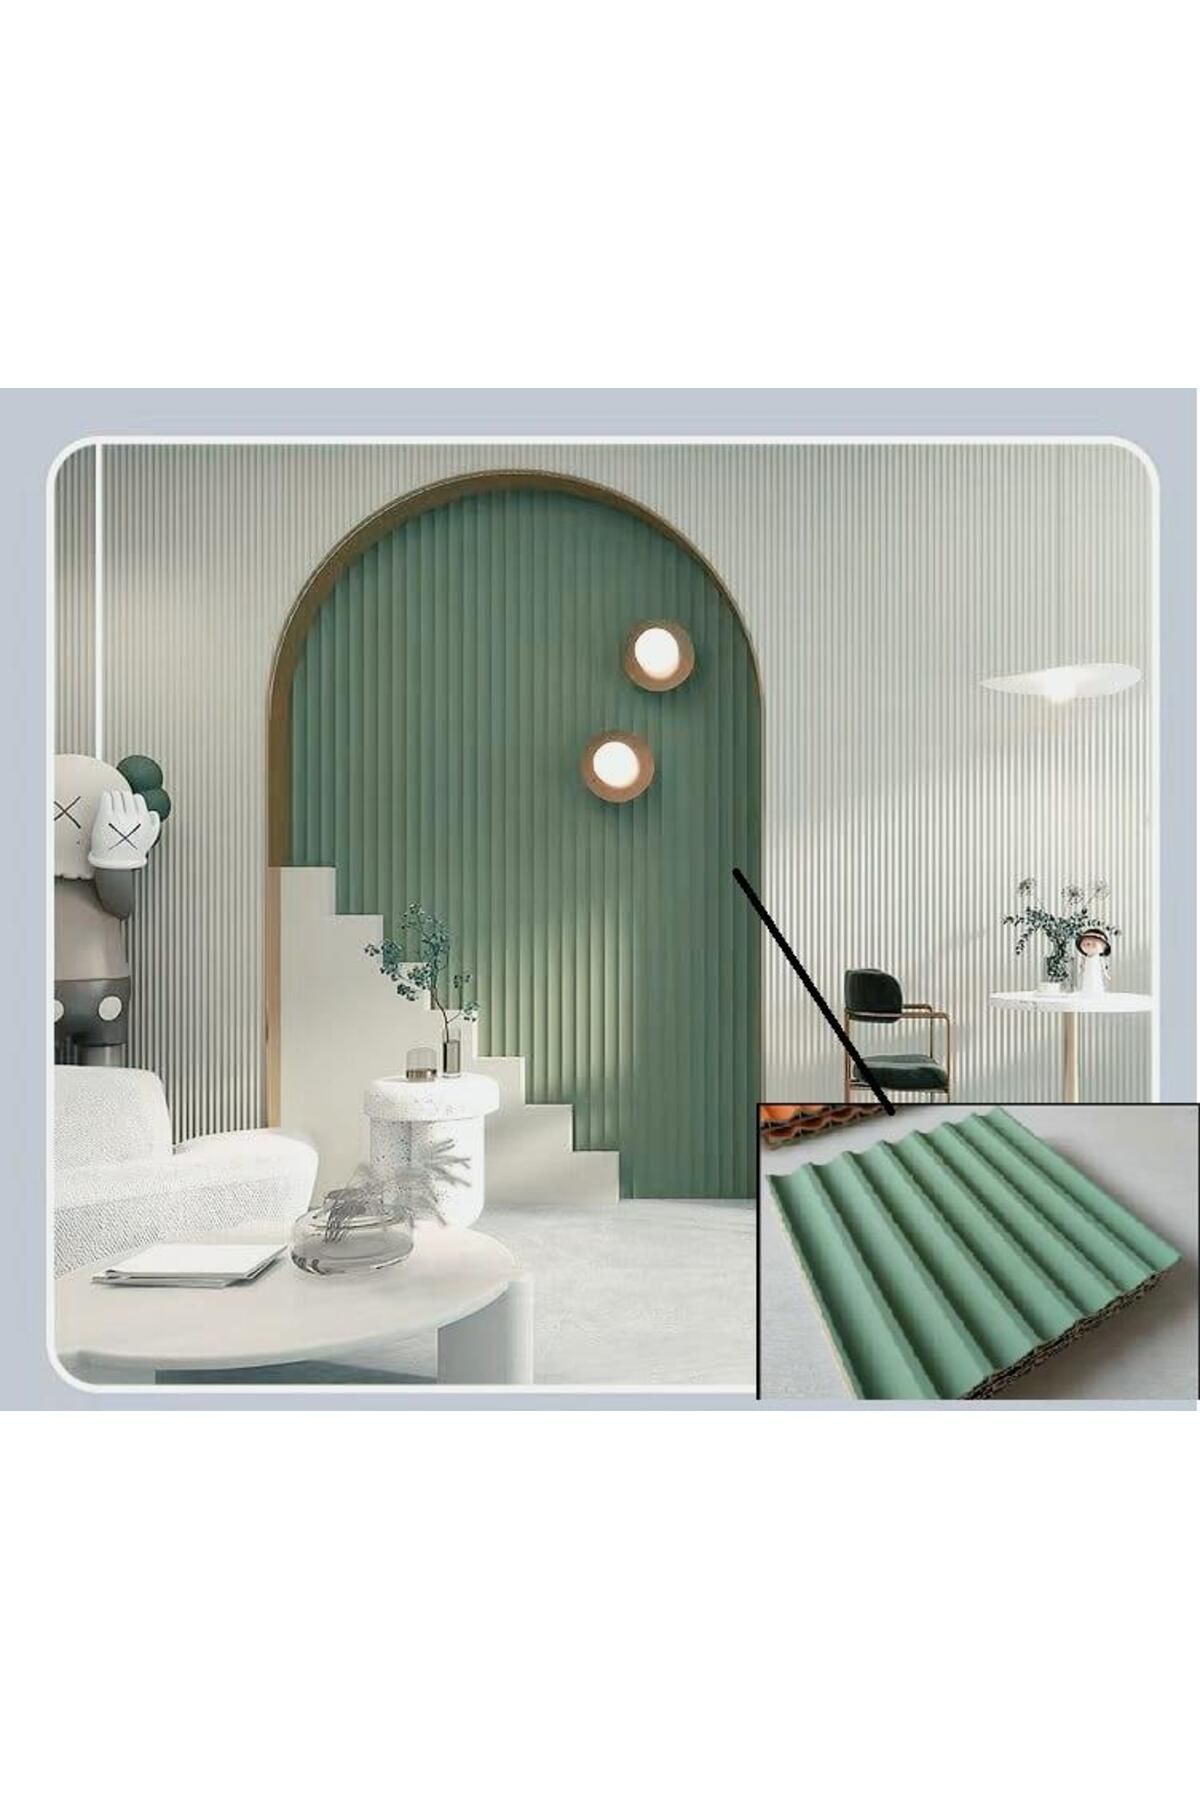 Renkli Duvarlar 20x290cm 1 Adet Atc Mint Green Prefabrik Ofis Konut Dekoratif Pvc Kaplama Lambiri Duvar Paneli